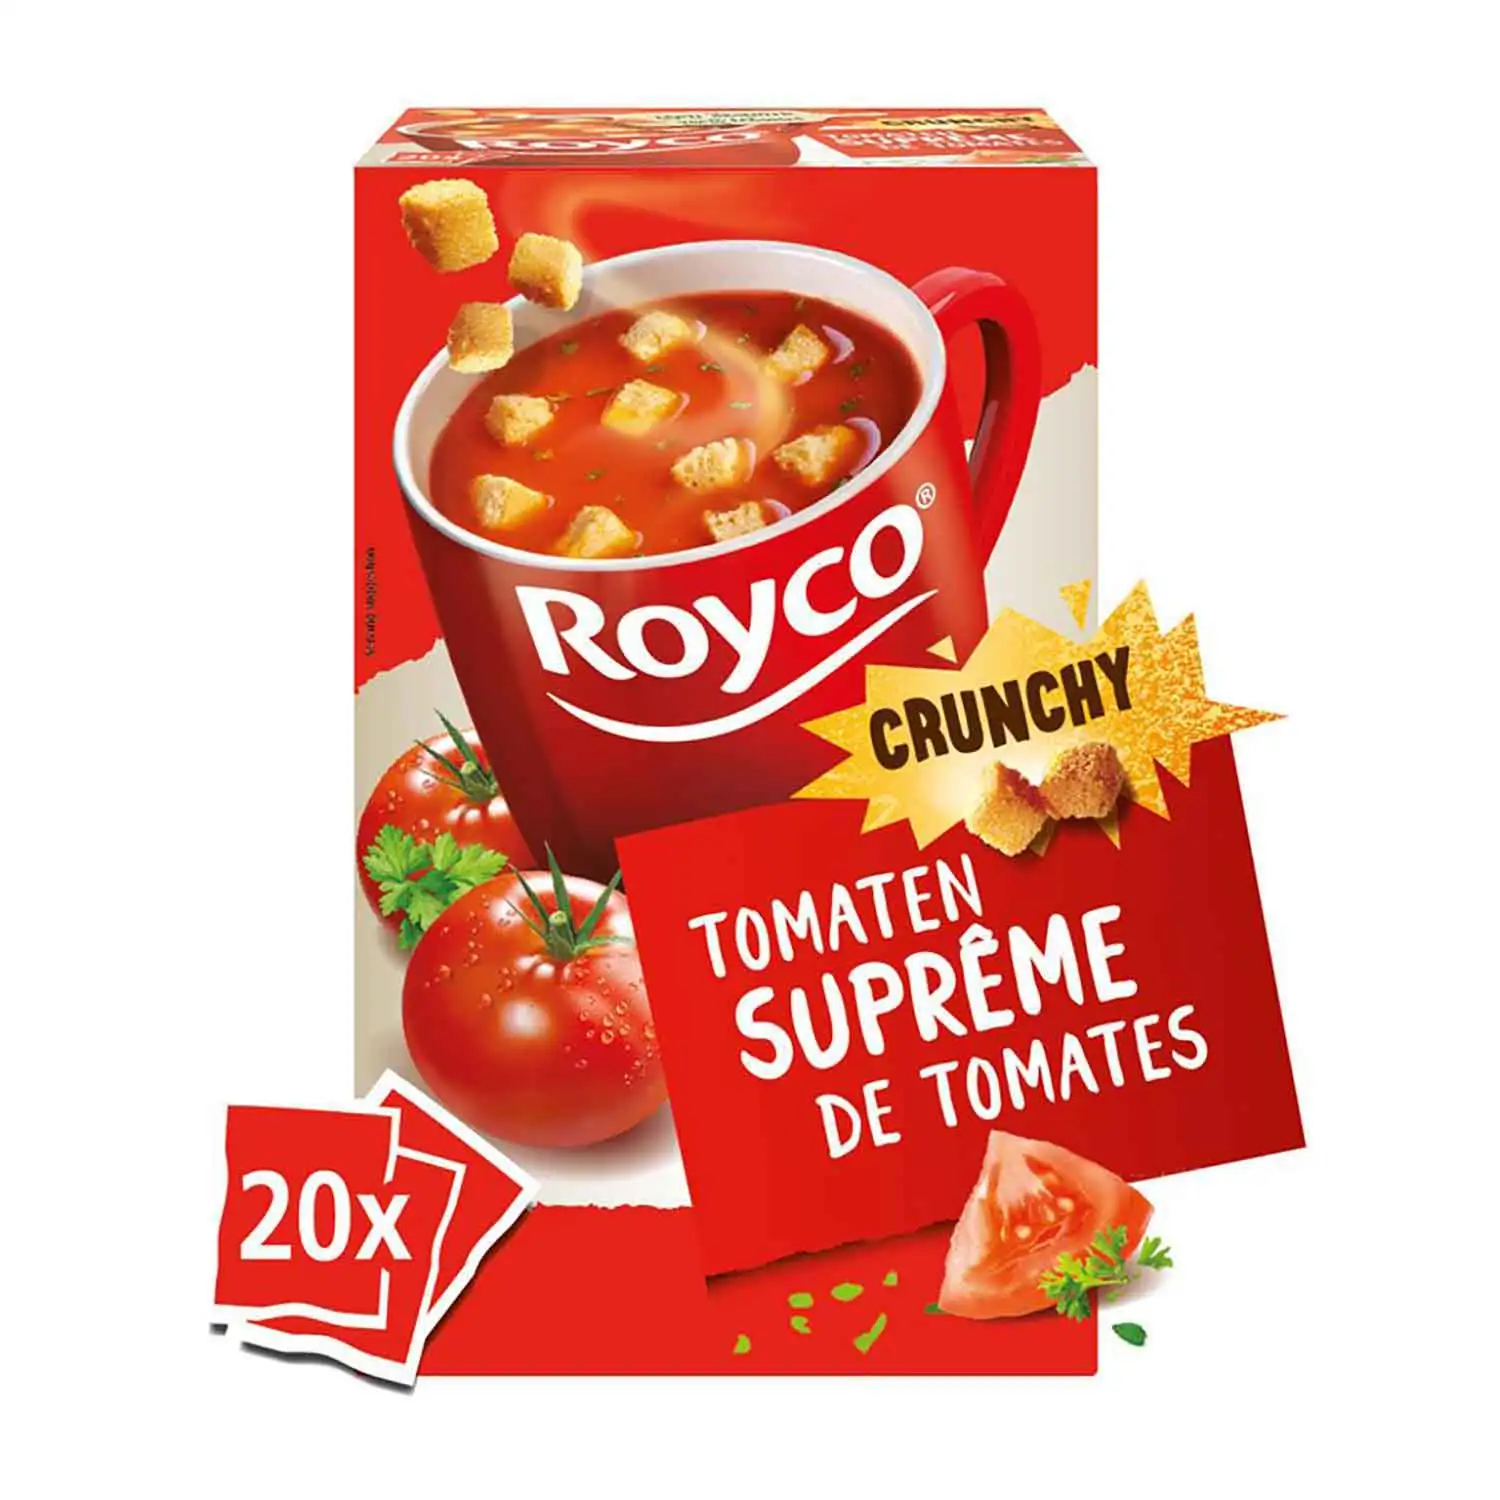 20x Royco crunchy supreme tomatoes 20,7g - Buy at Real Tobacco